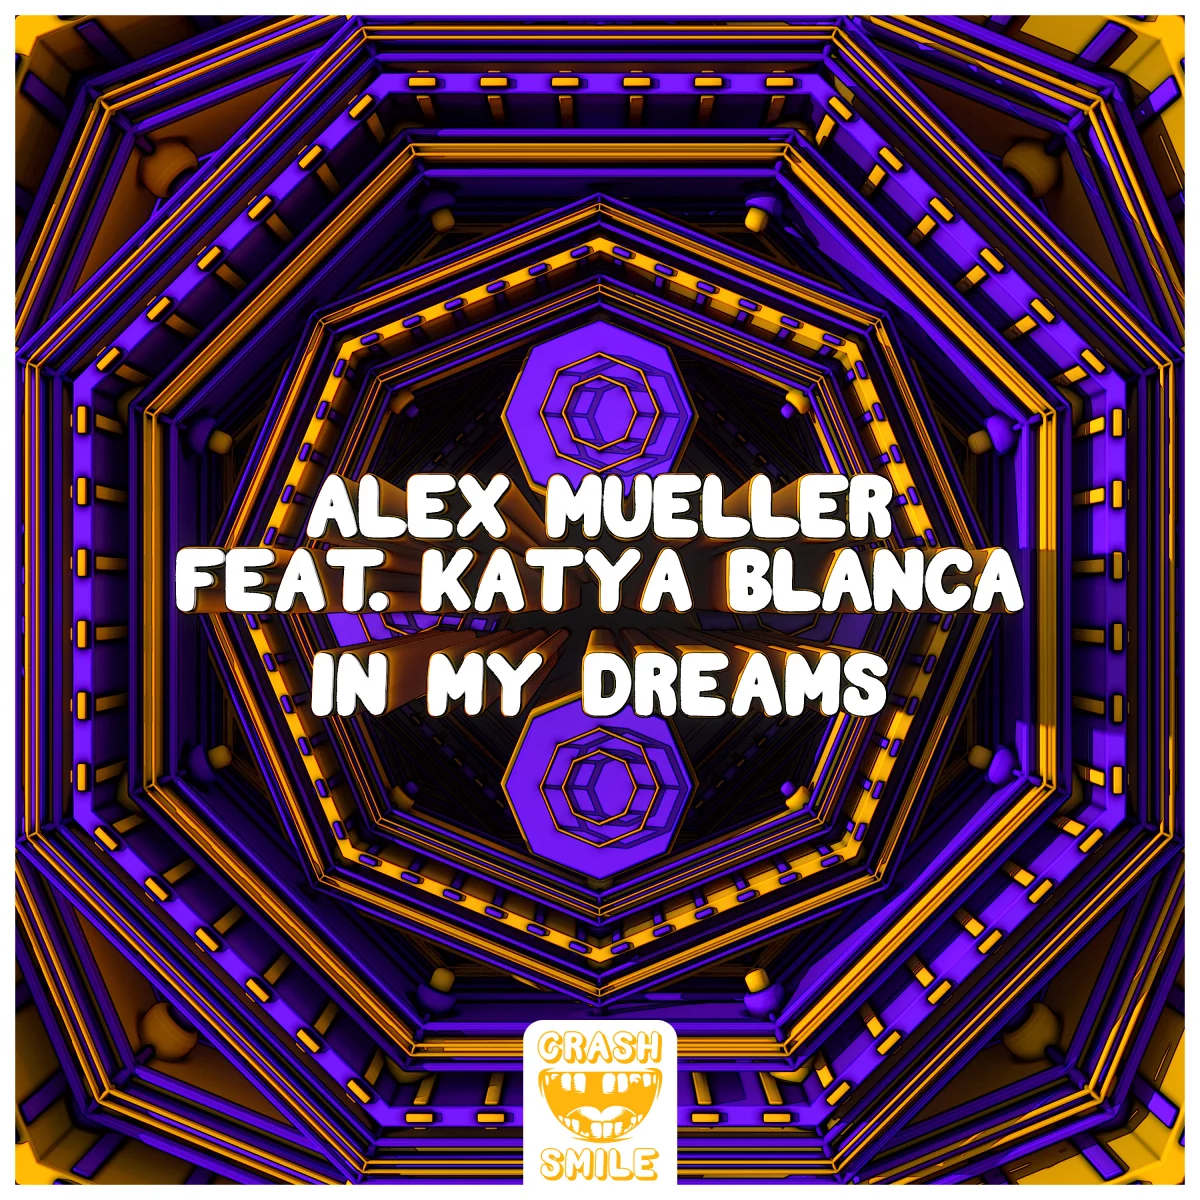 In My Dreams - Alex Mueller⁠ feat. KATYA BLANCA⁠ 